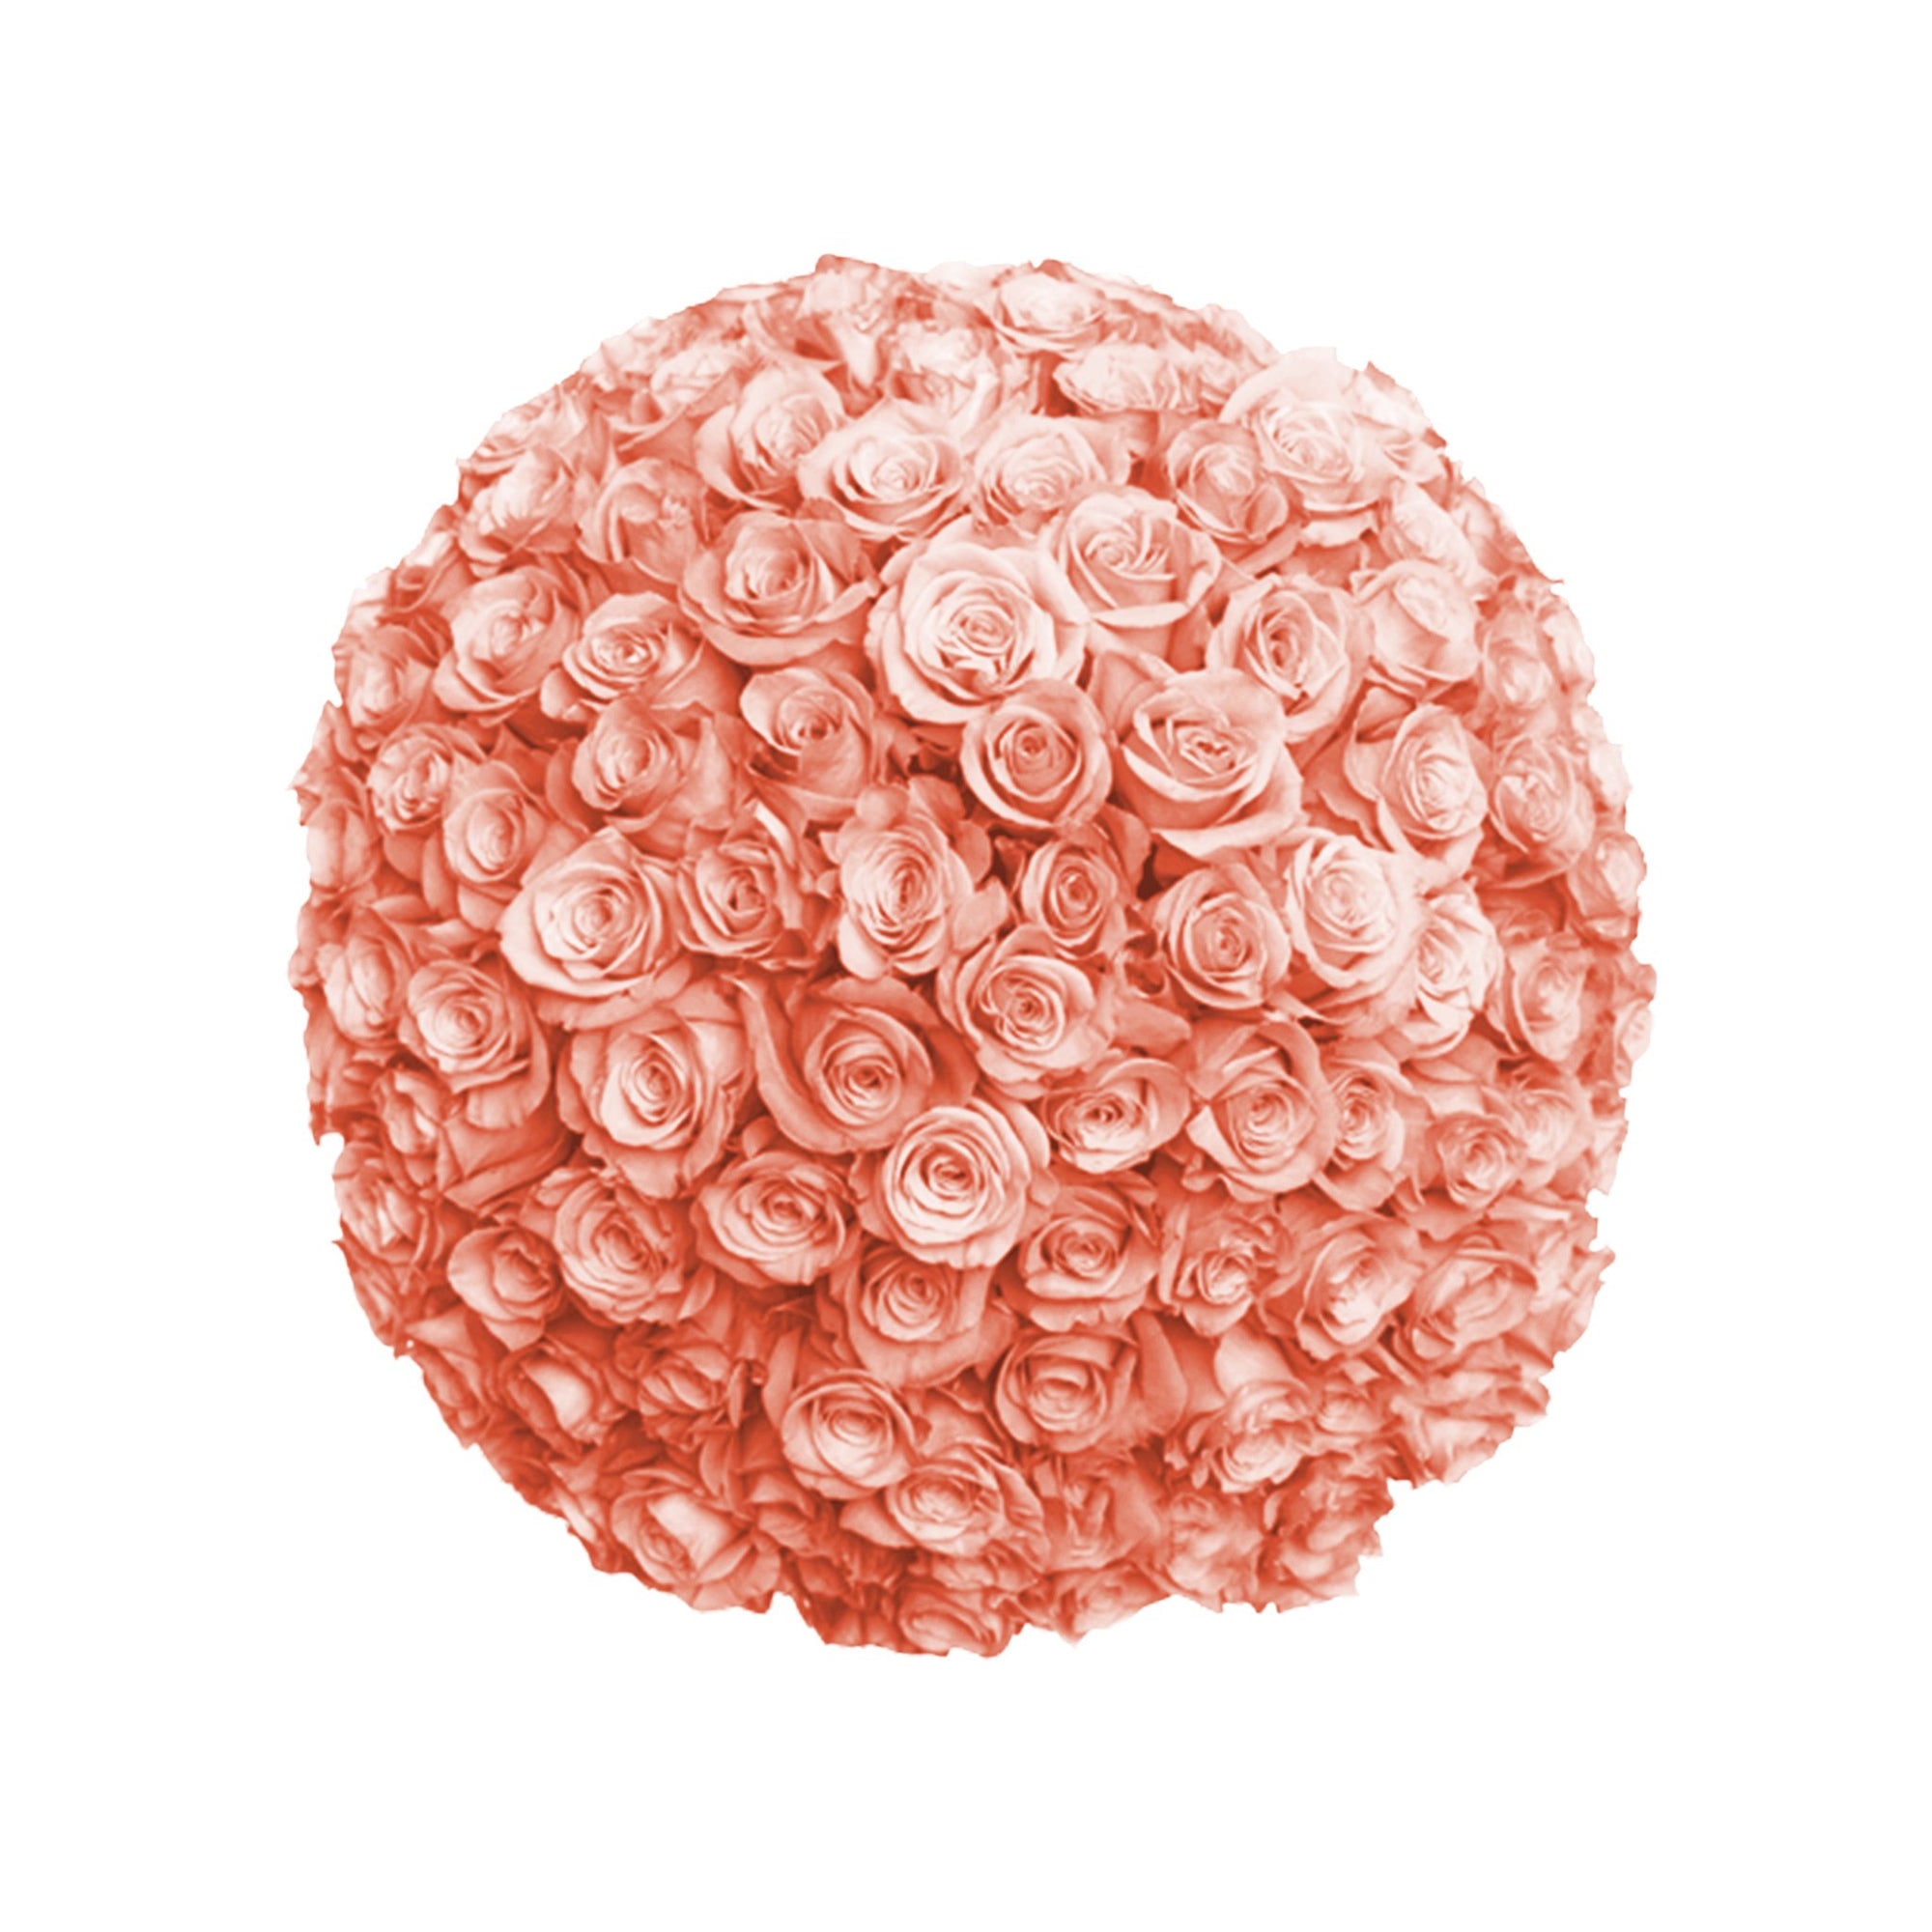 Fresh Roses in a Crystal Vase | Peach - 1 Dozen - Roses